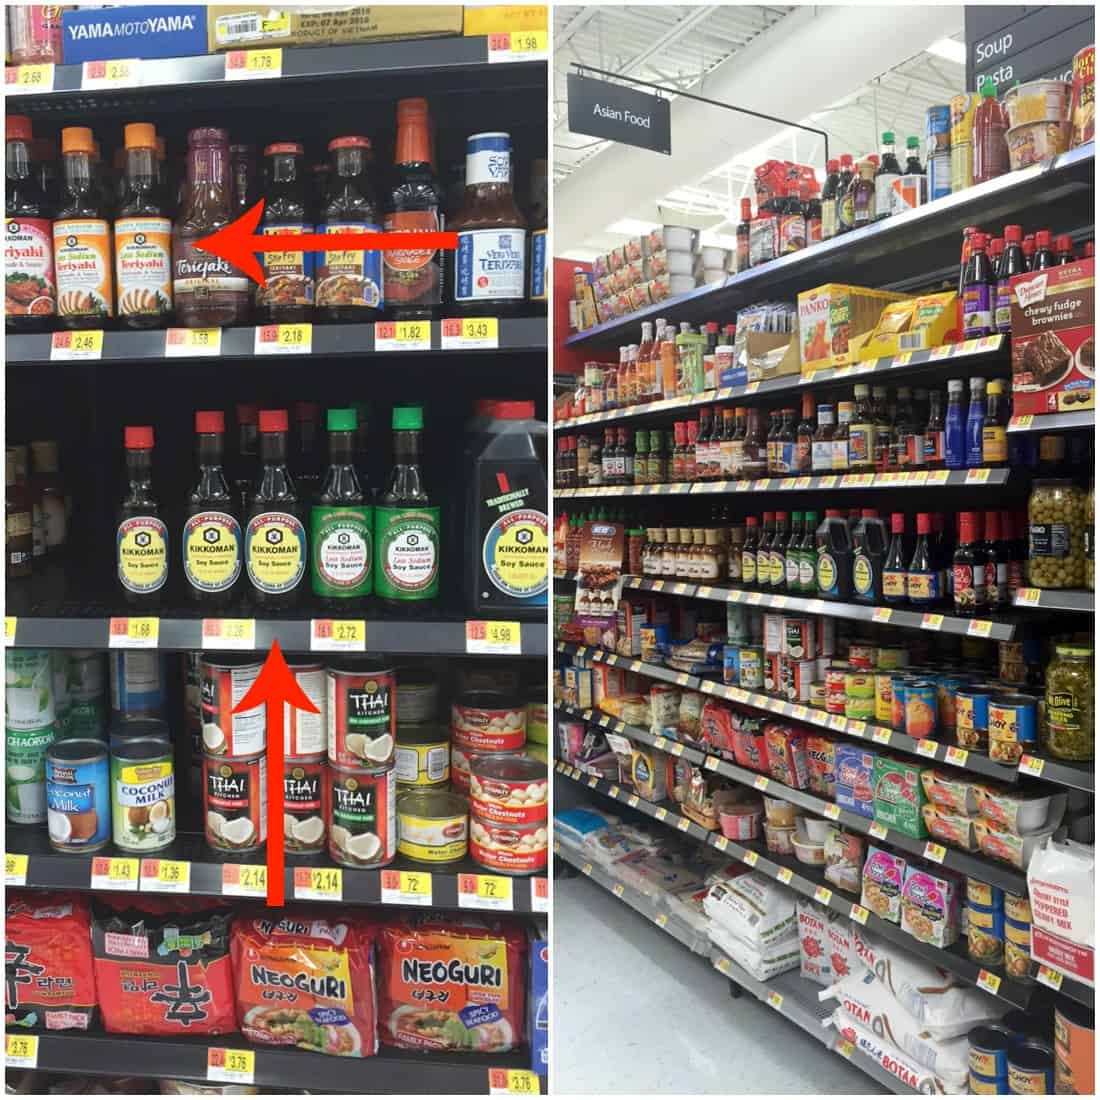 Kikkoman products on the supermarket shelves.